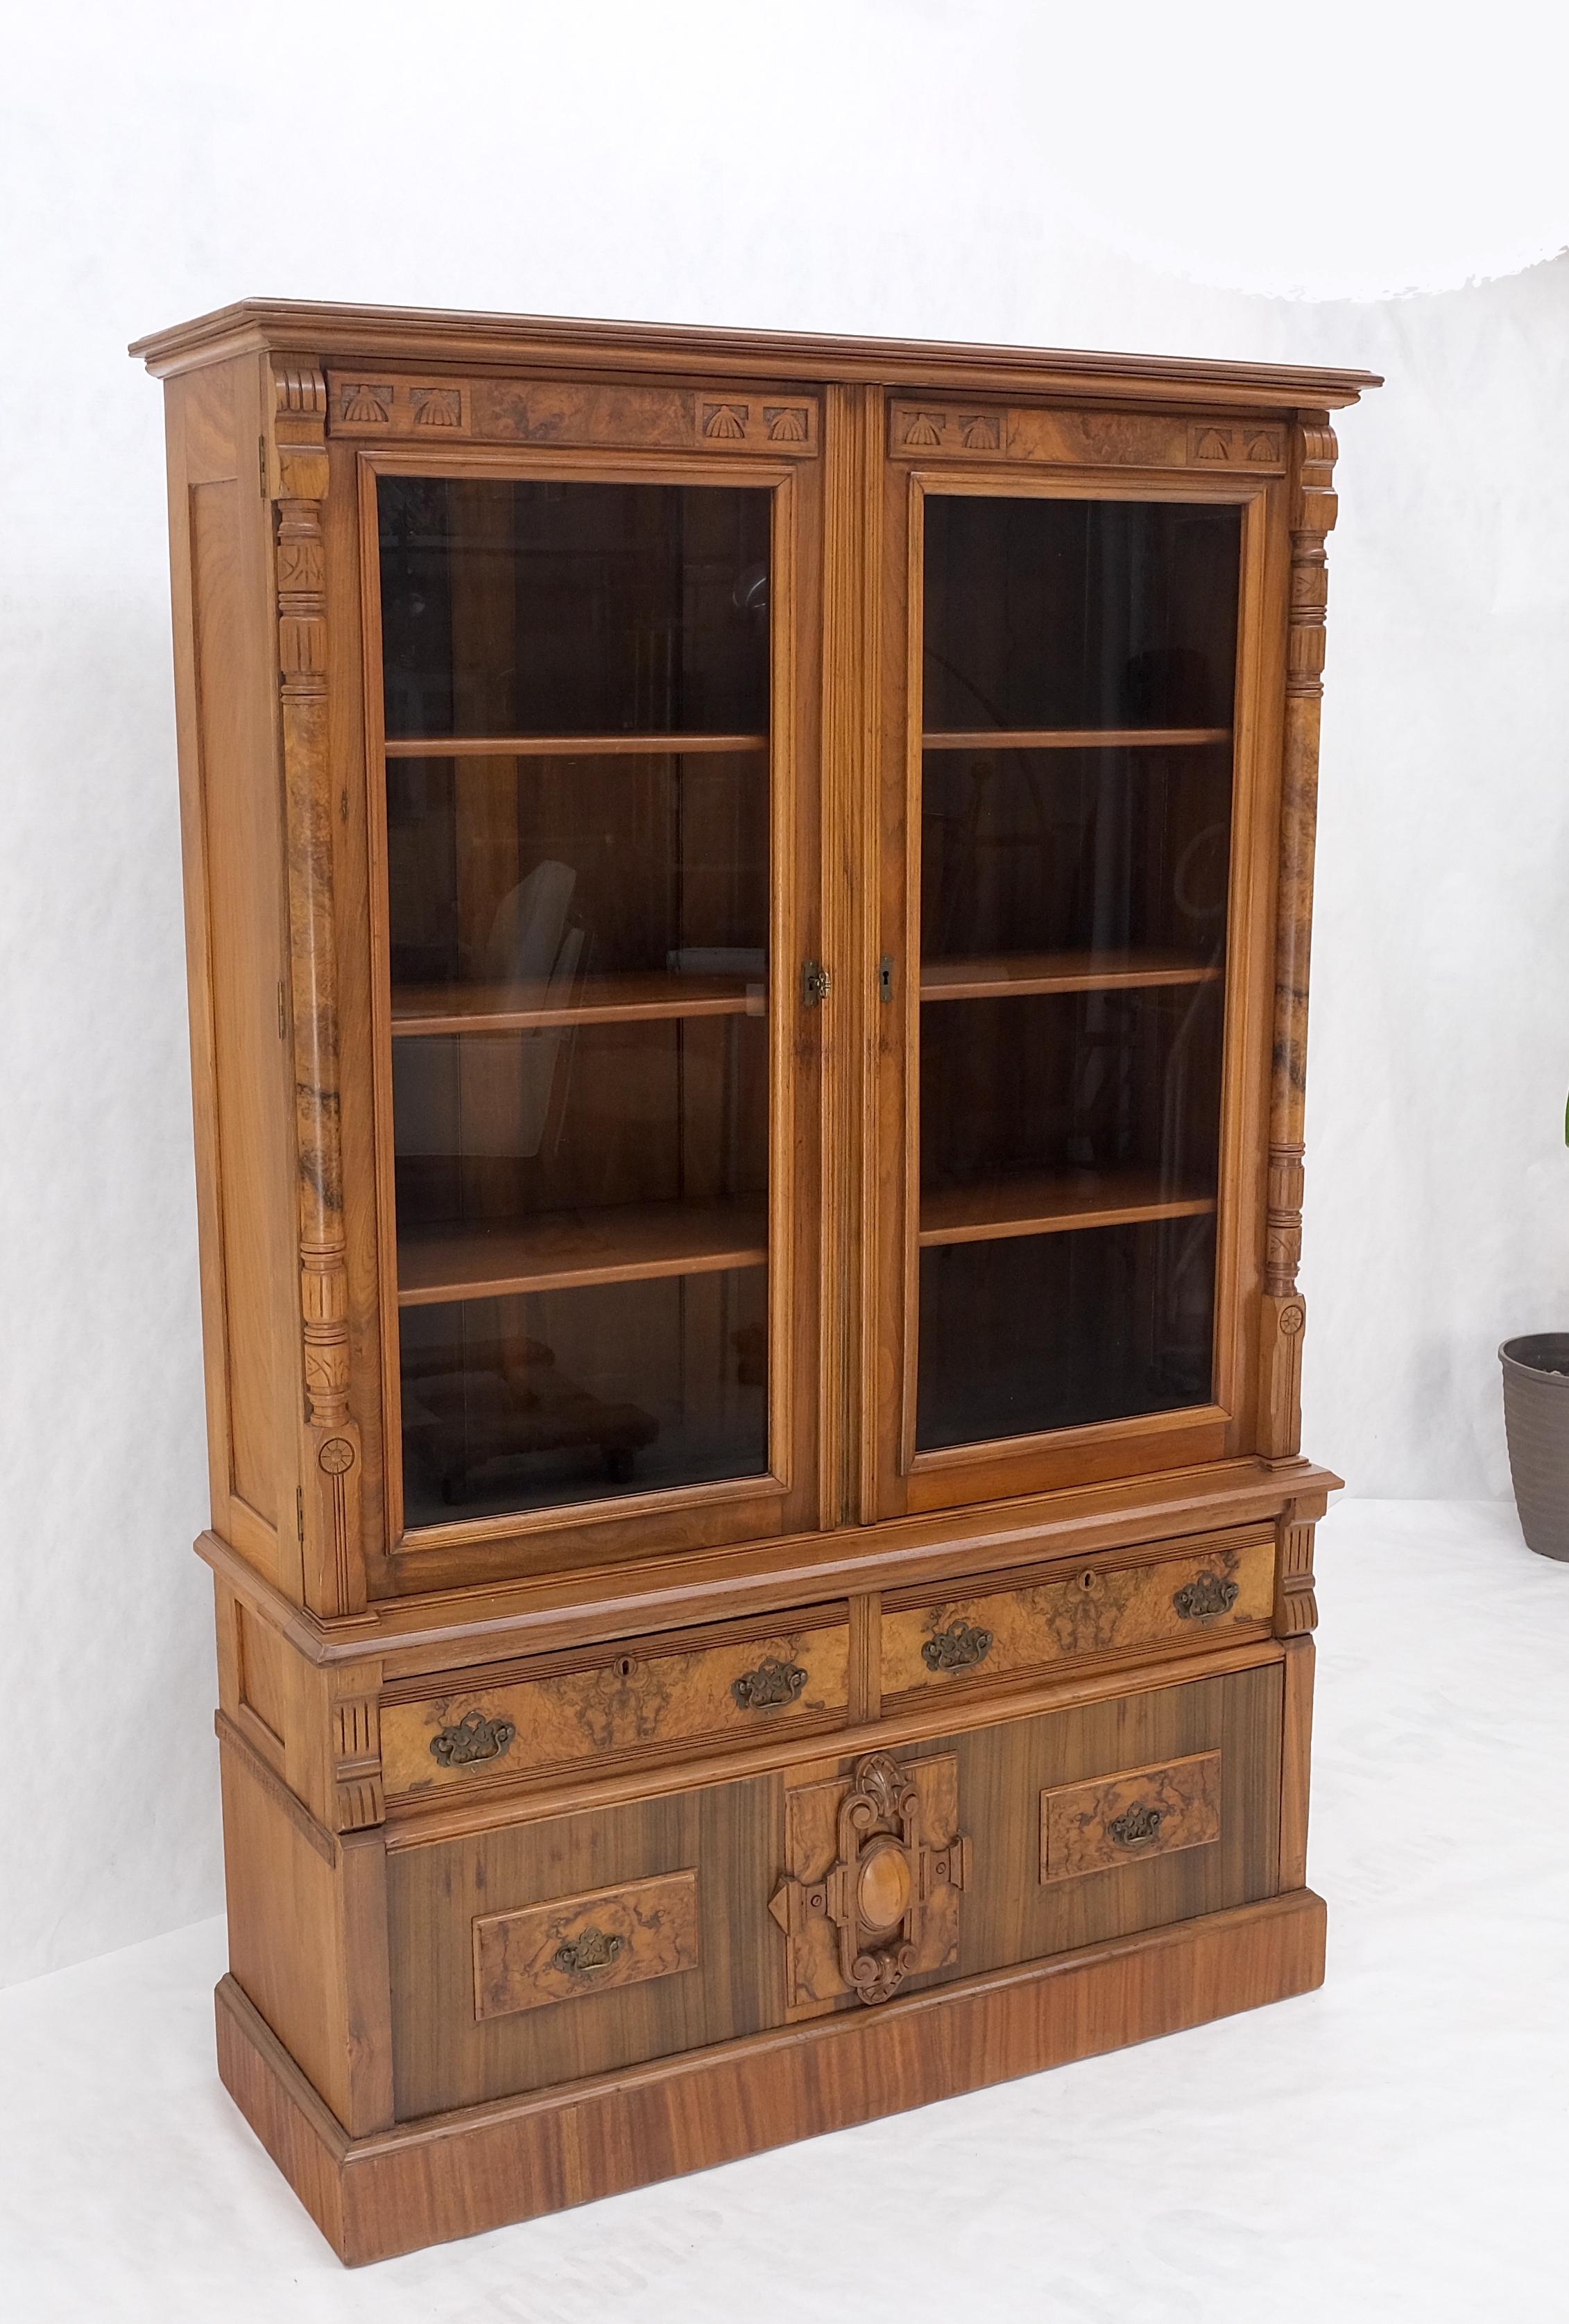 Burl Walnut Adjustable Shelves Two Doors One Drawer Antique Bookcase Cabinet For Sale 9